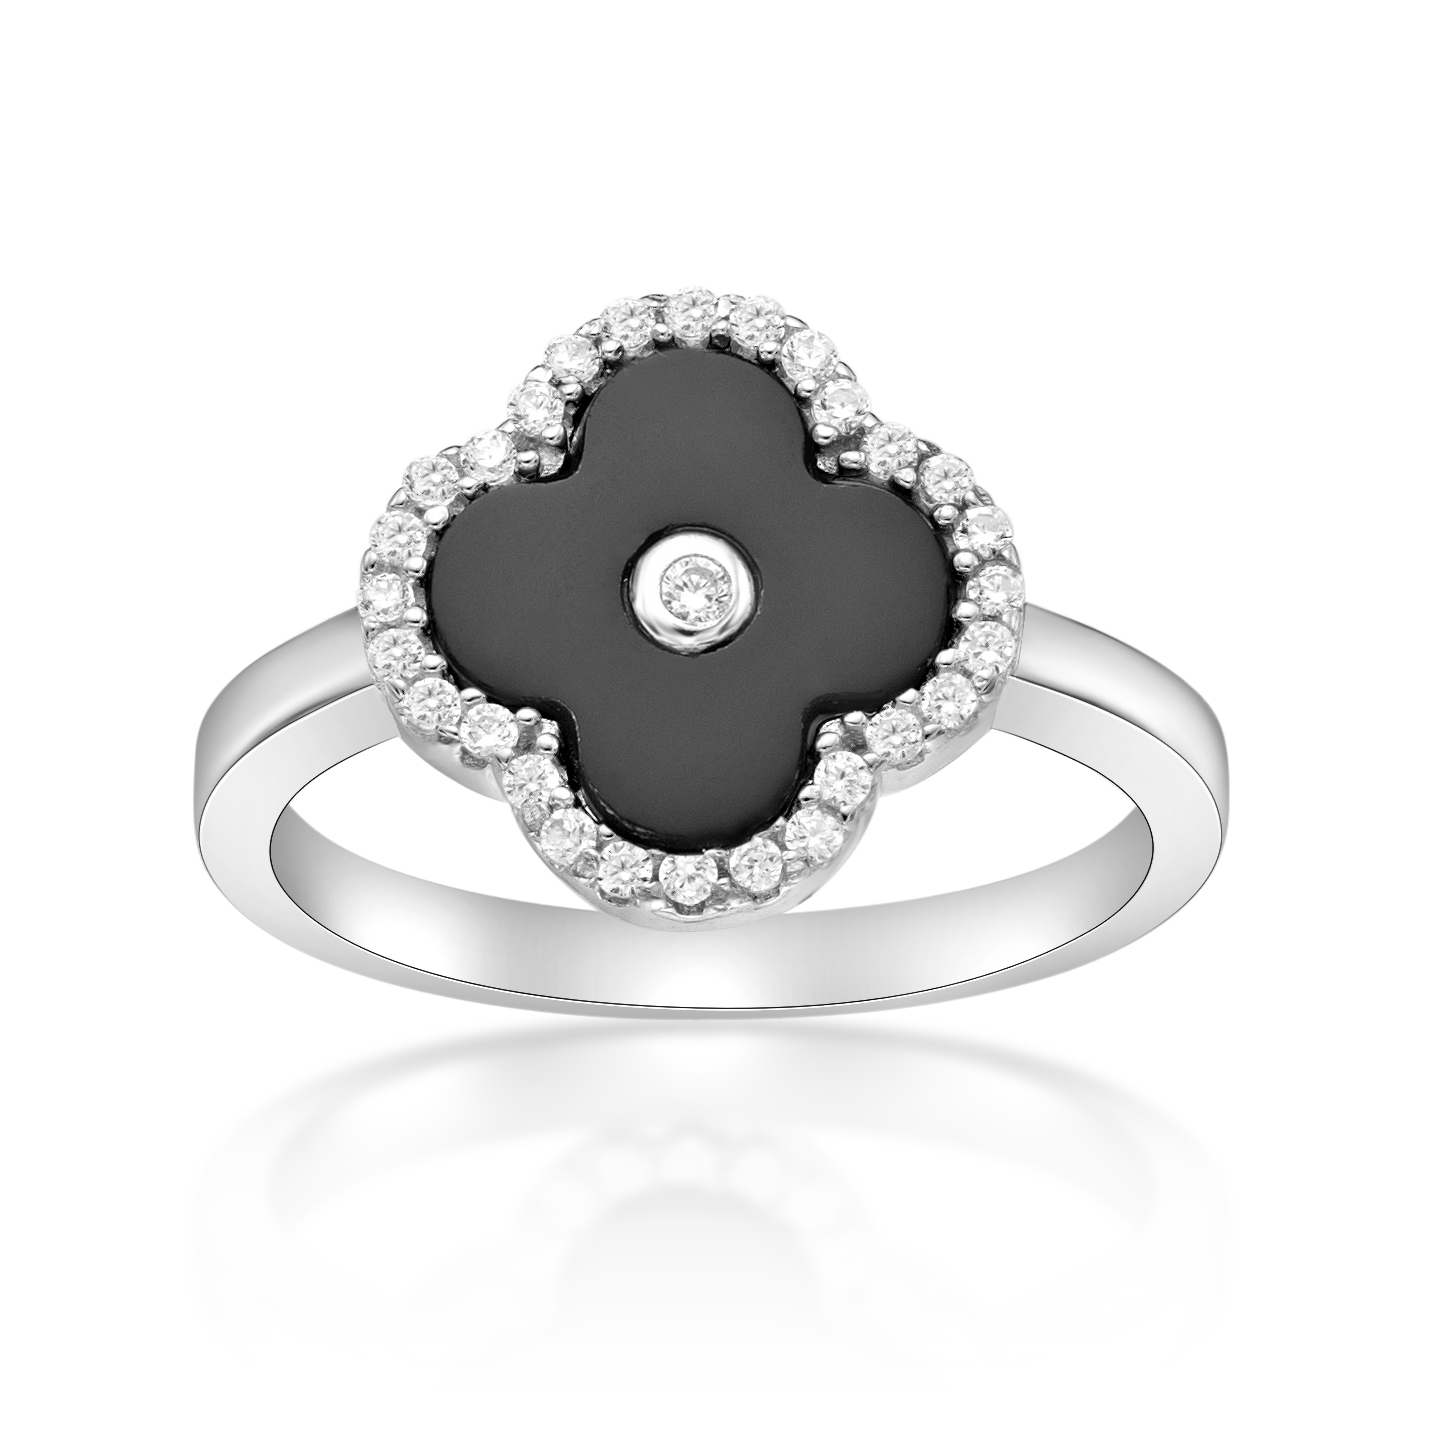 Lavari Jewelers Women’s Black Onyx Flower Ring, 925 Sterling Silver, Cubic Zirconia, Size 6